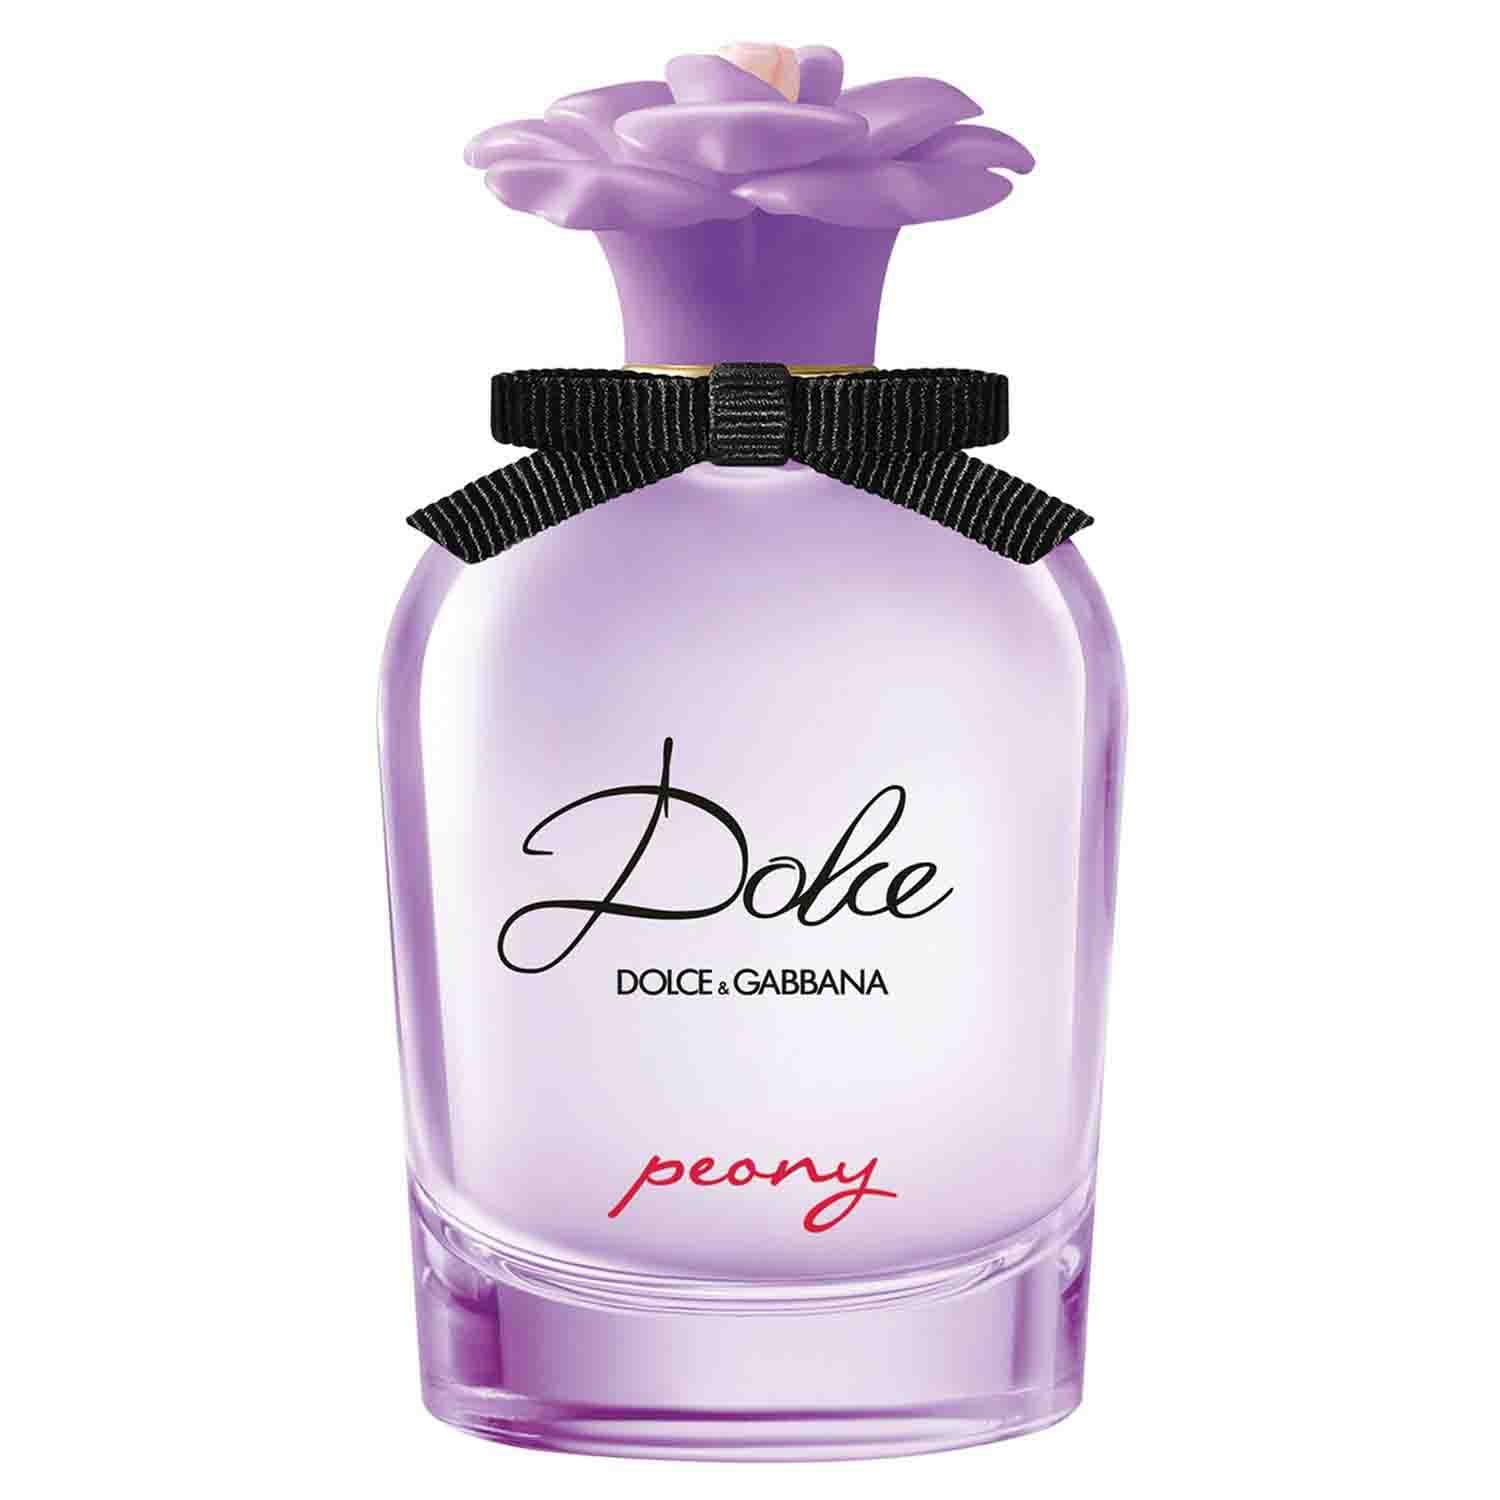 New Dolce & Gabbana Dolce Peony Eau De Parfum - 50ML